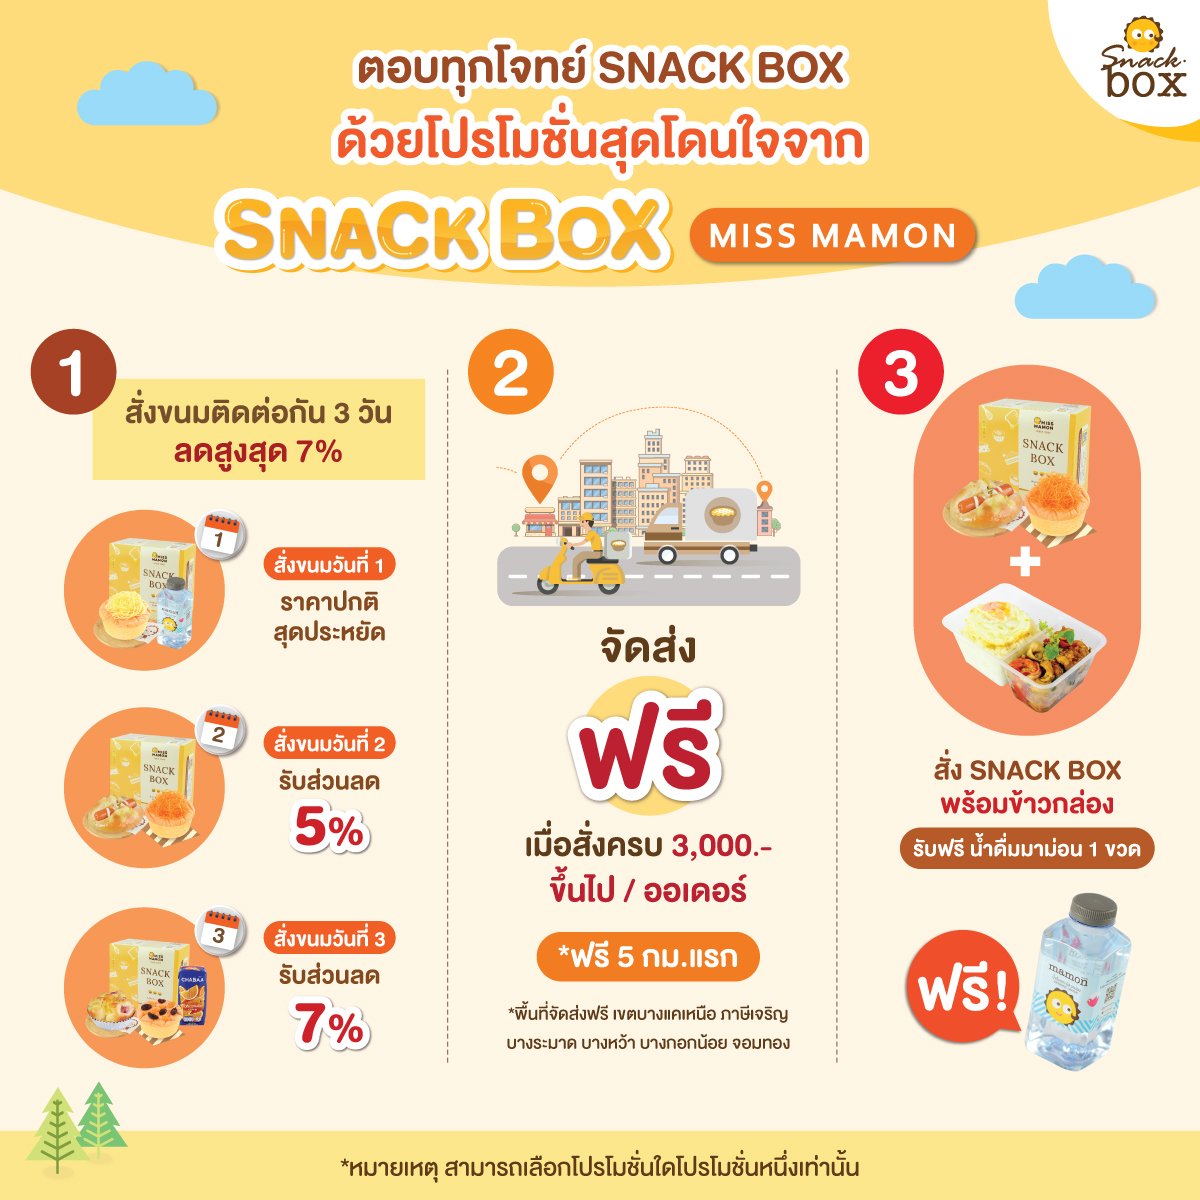 Snack Box Miss Mamon กับ 3 โปรโมชั่นสุดคุ้มให้คุณเลือก